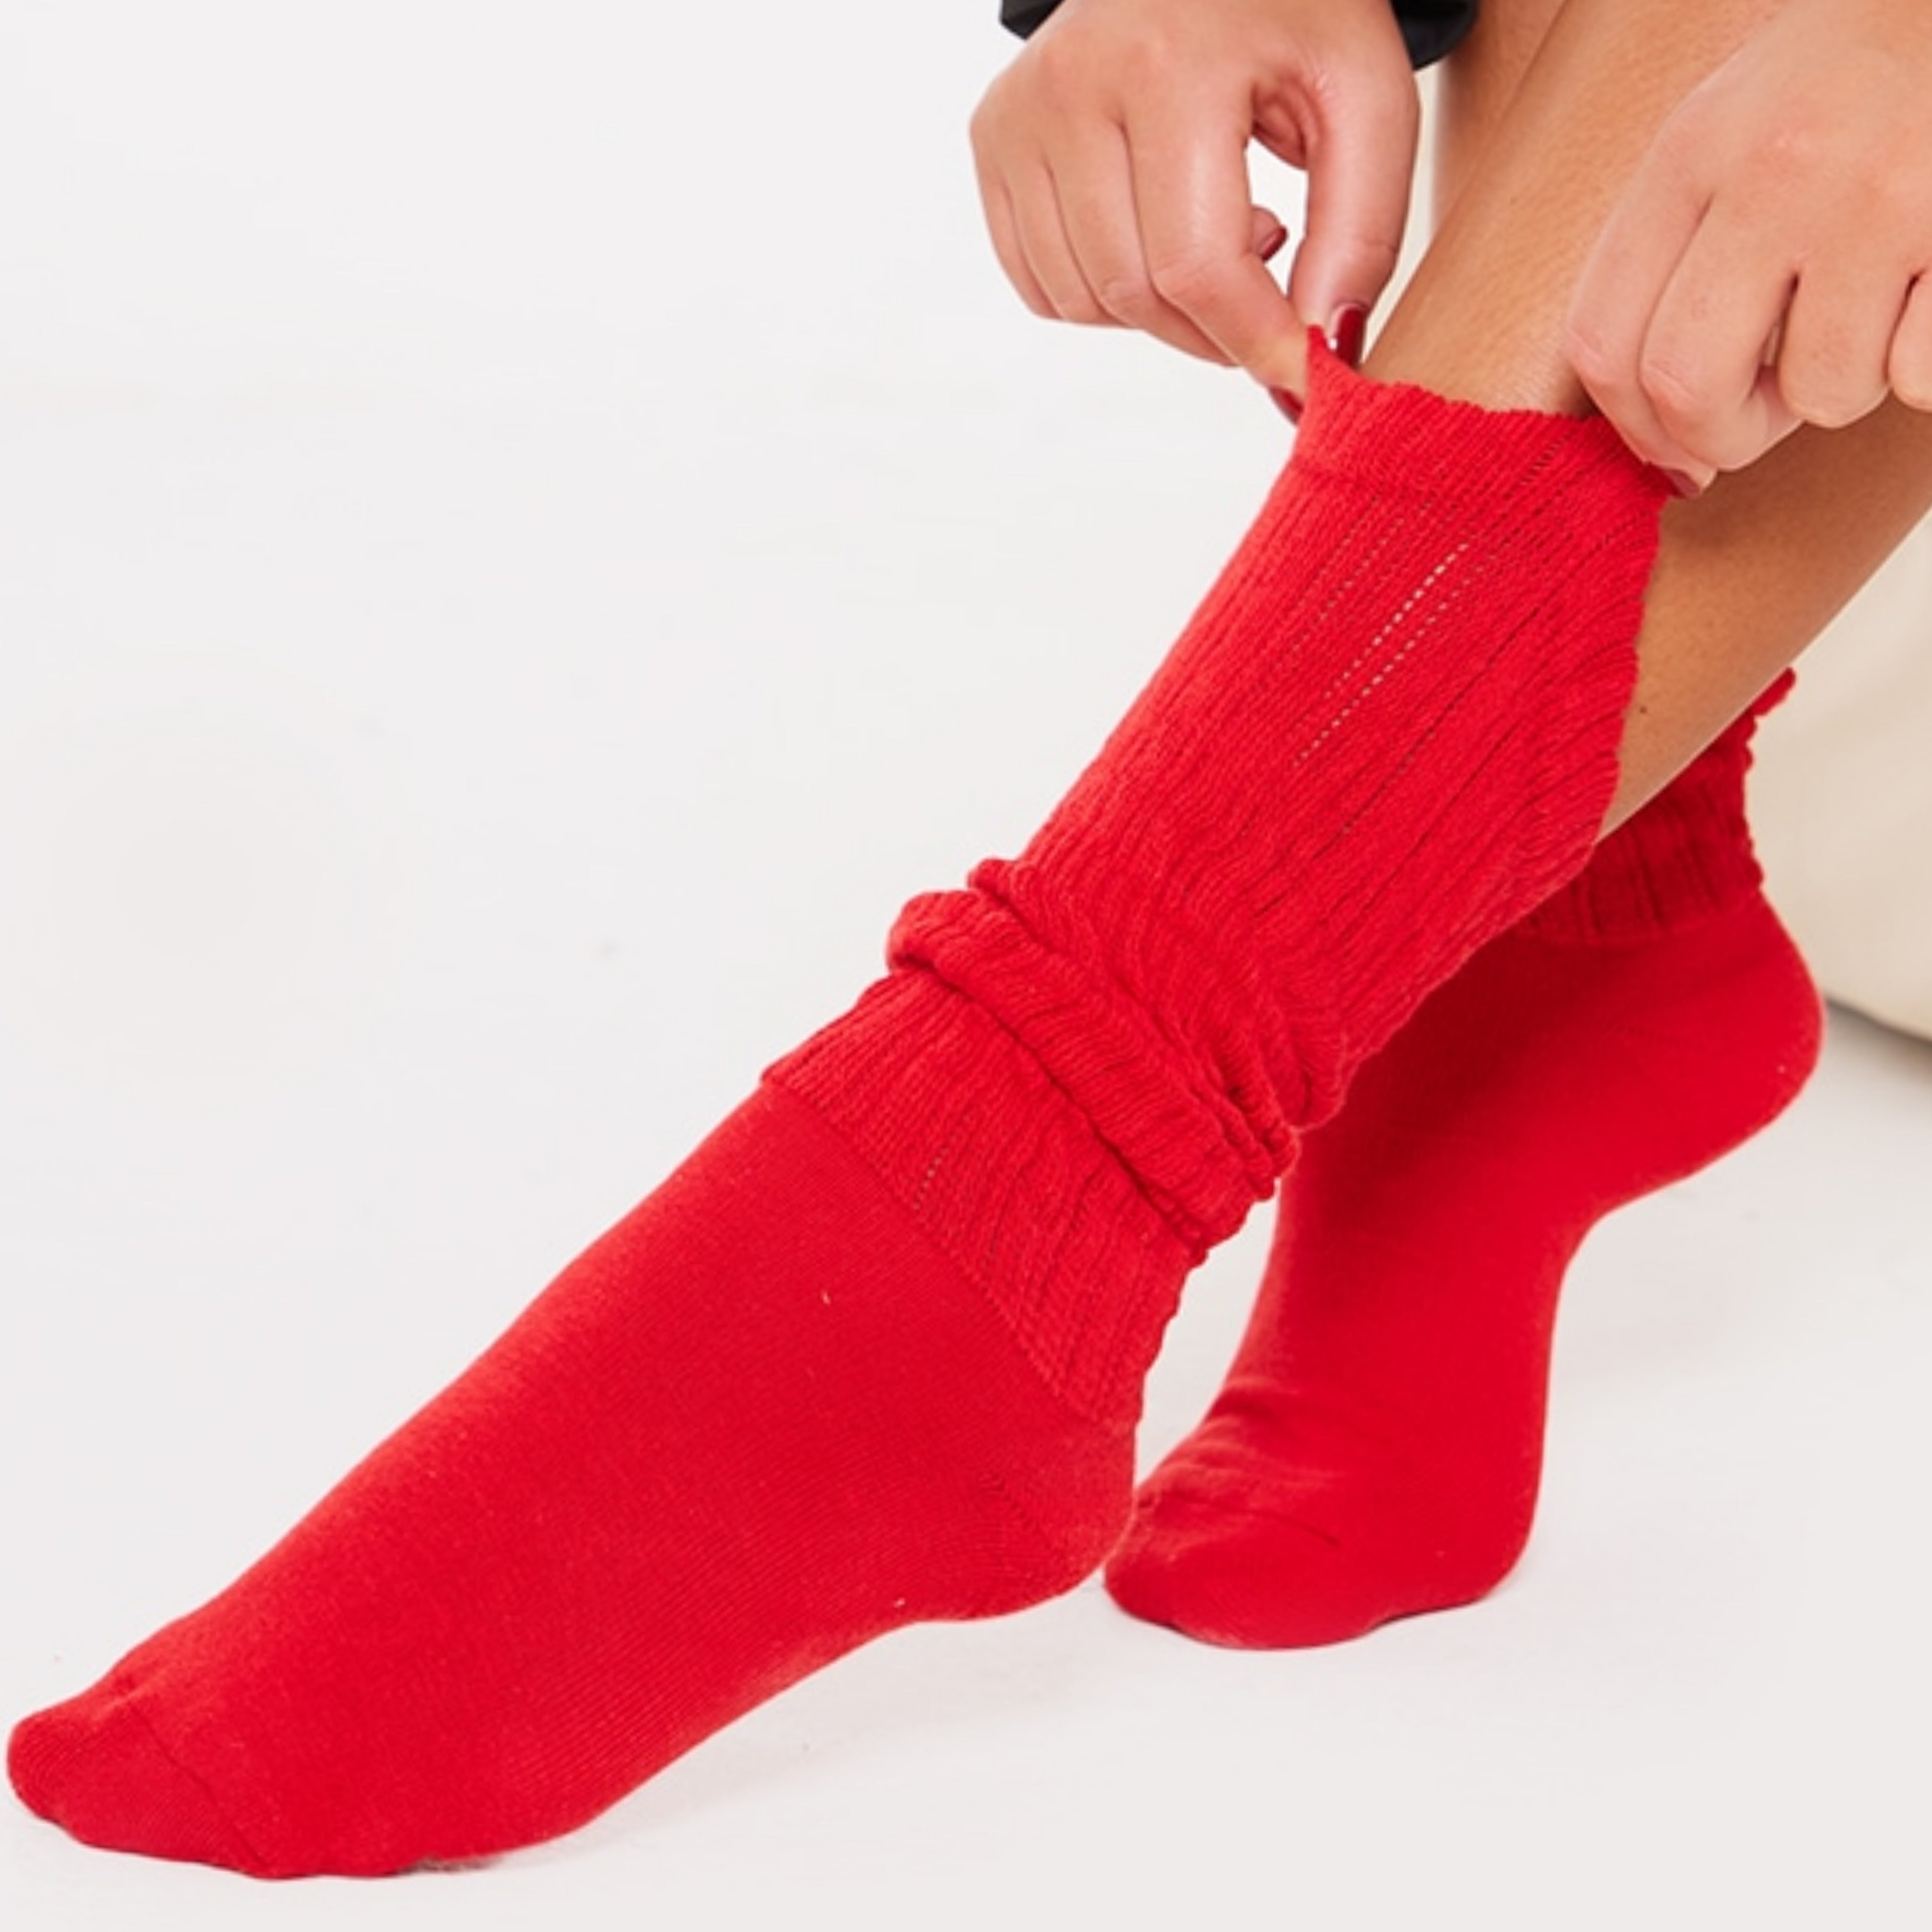 Red Slouch Socks (Adult Medium - Women's Shoe Sizes 5-10)